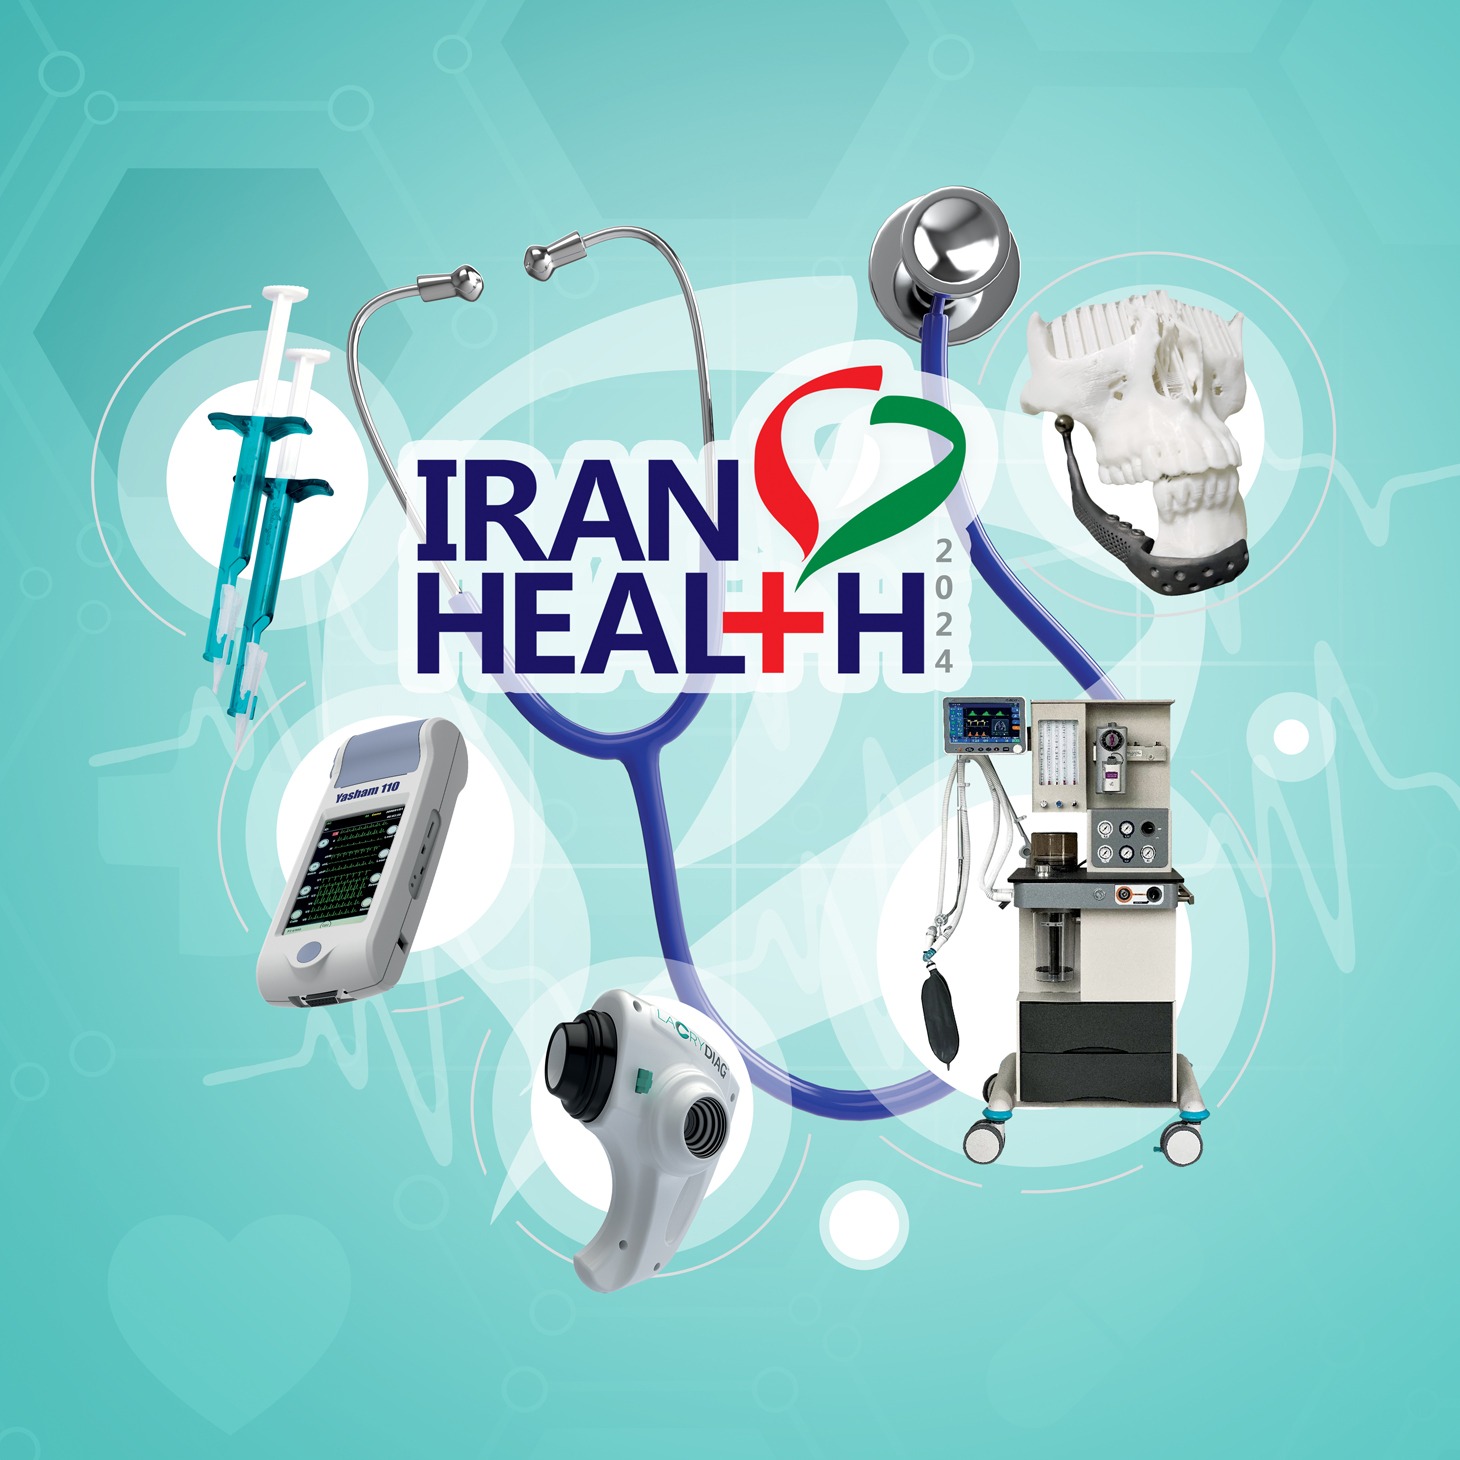 iranhealth2024 logo 2 - The 25th International Health Exhibition 2024 in Iran/Tehran